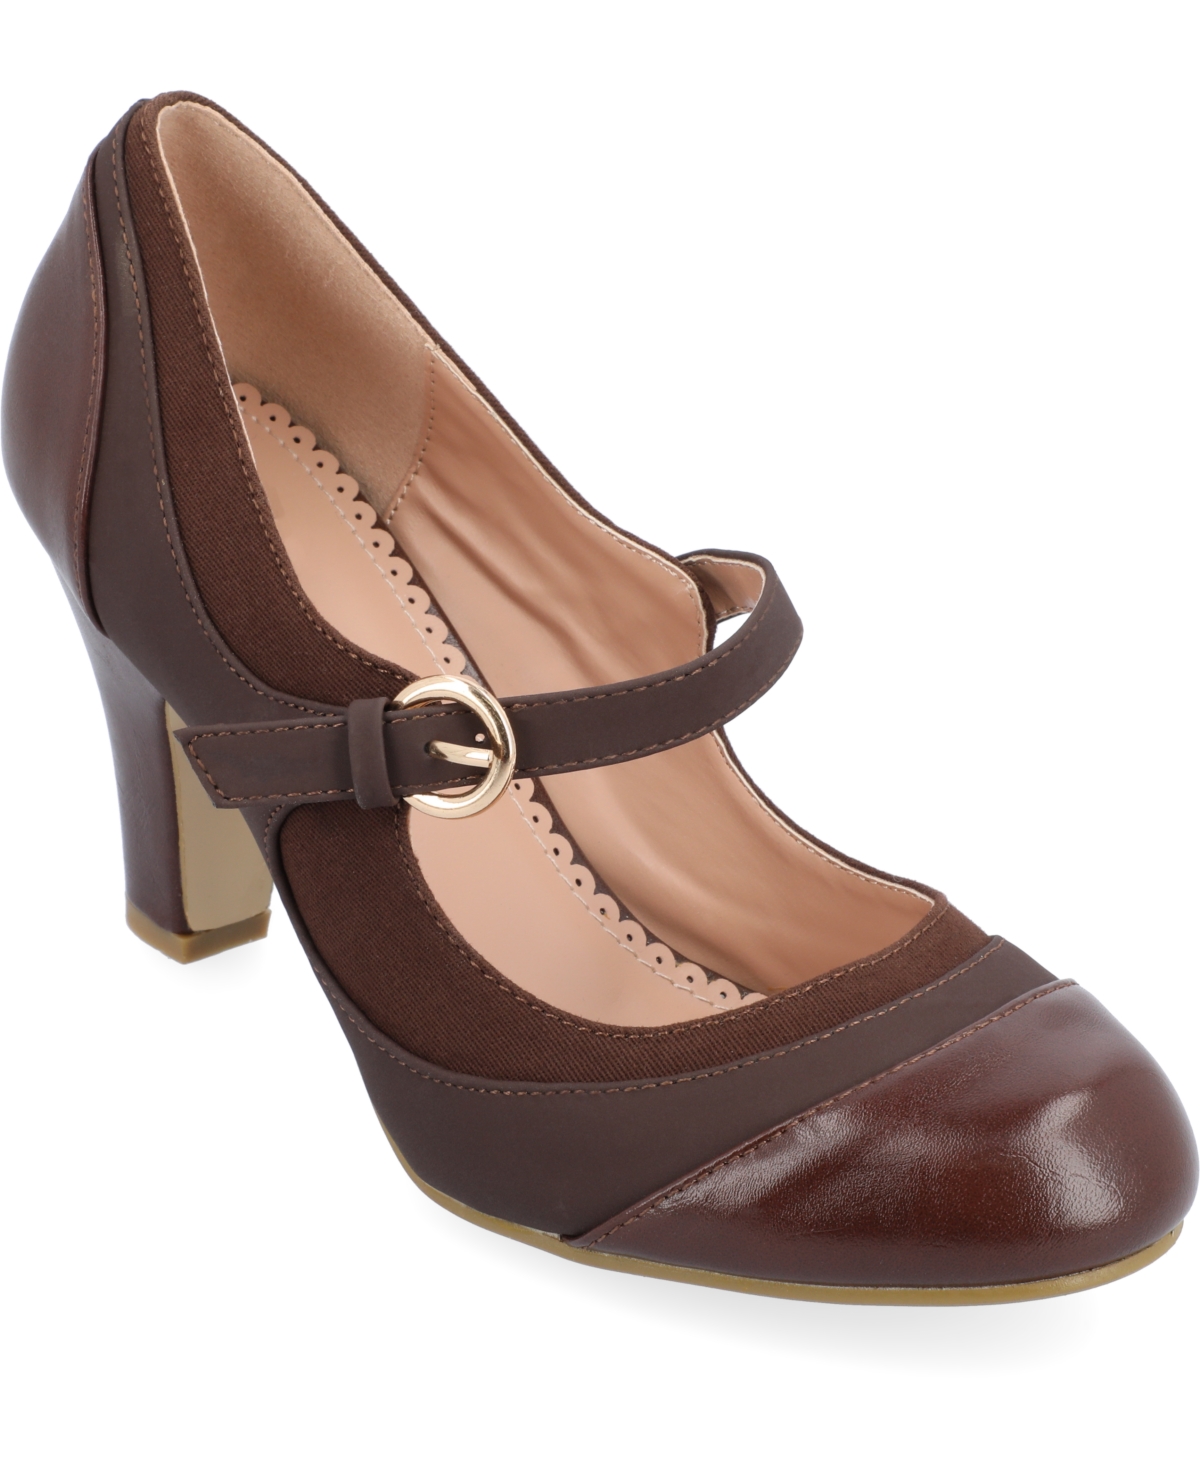 Vintage Style Shoes by Aerosoles Journee Collection Womens Siri Tweed Buckle Heels - Brown $42.74 AT vintagedancer.com